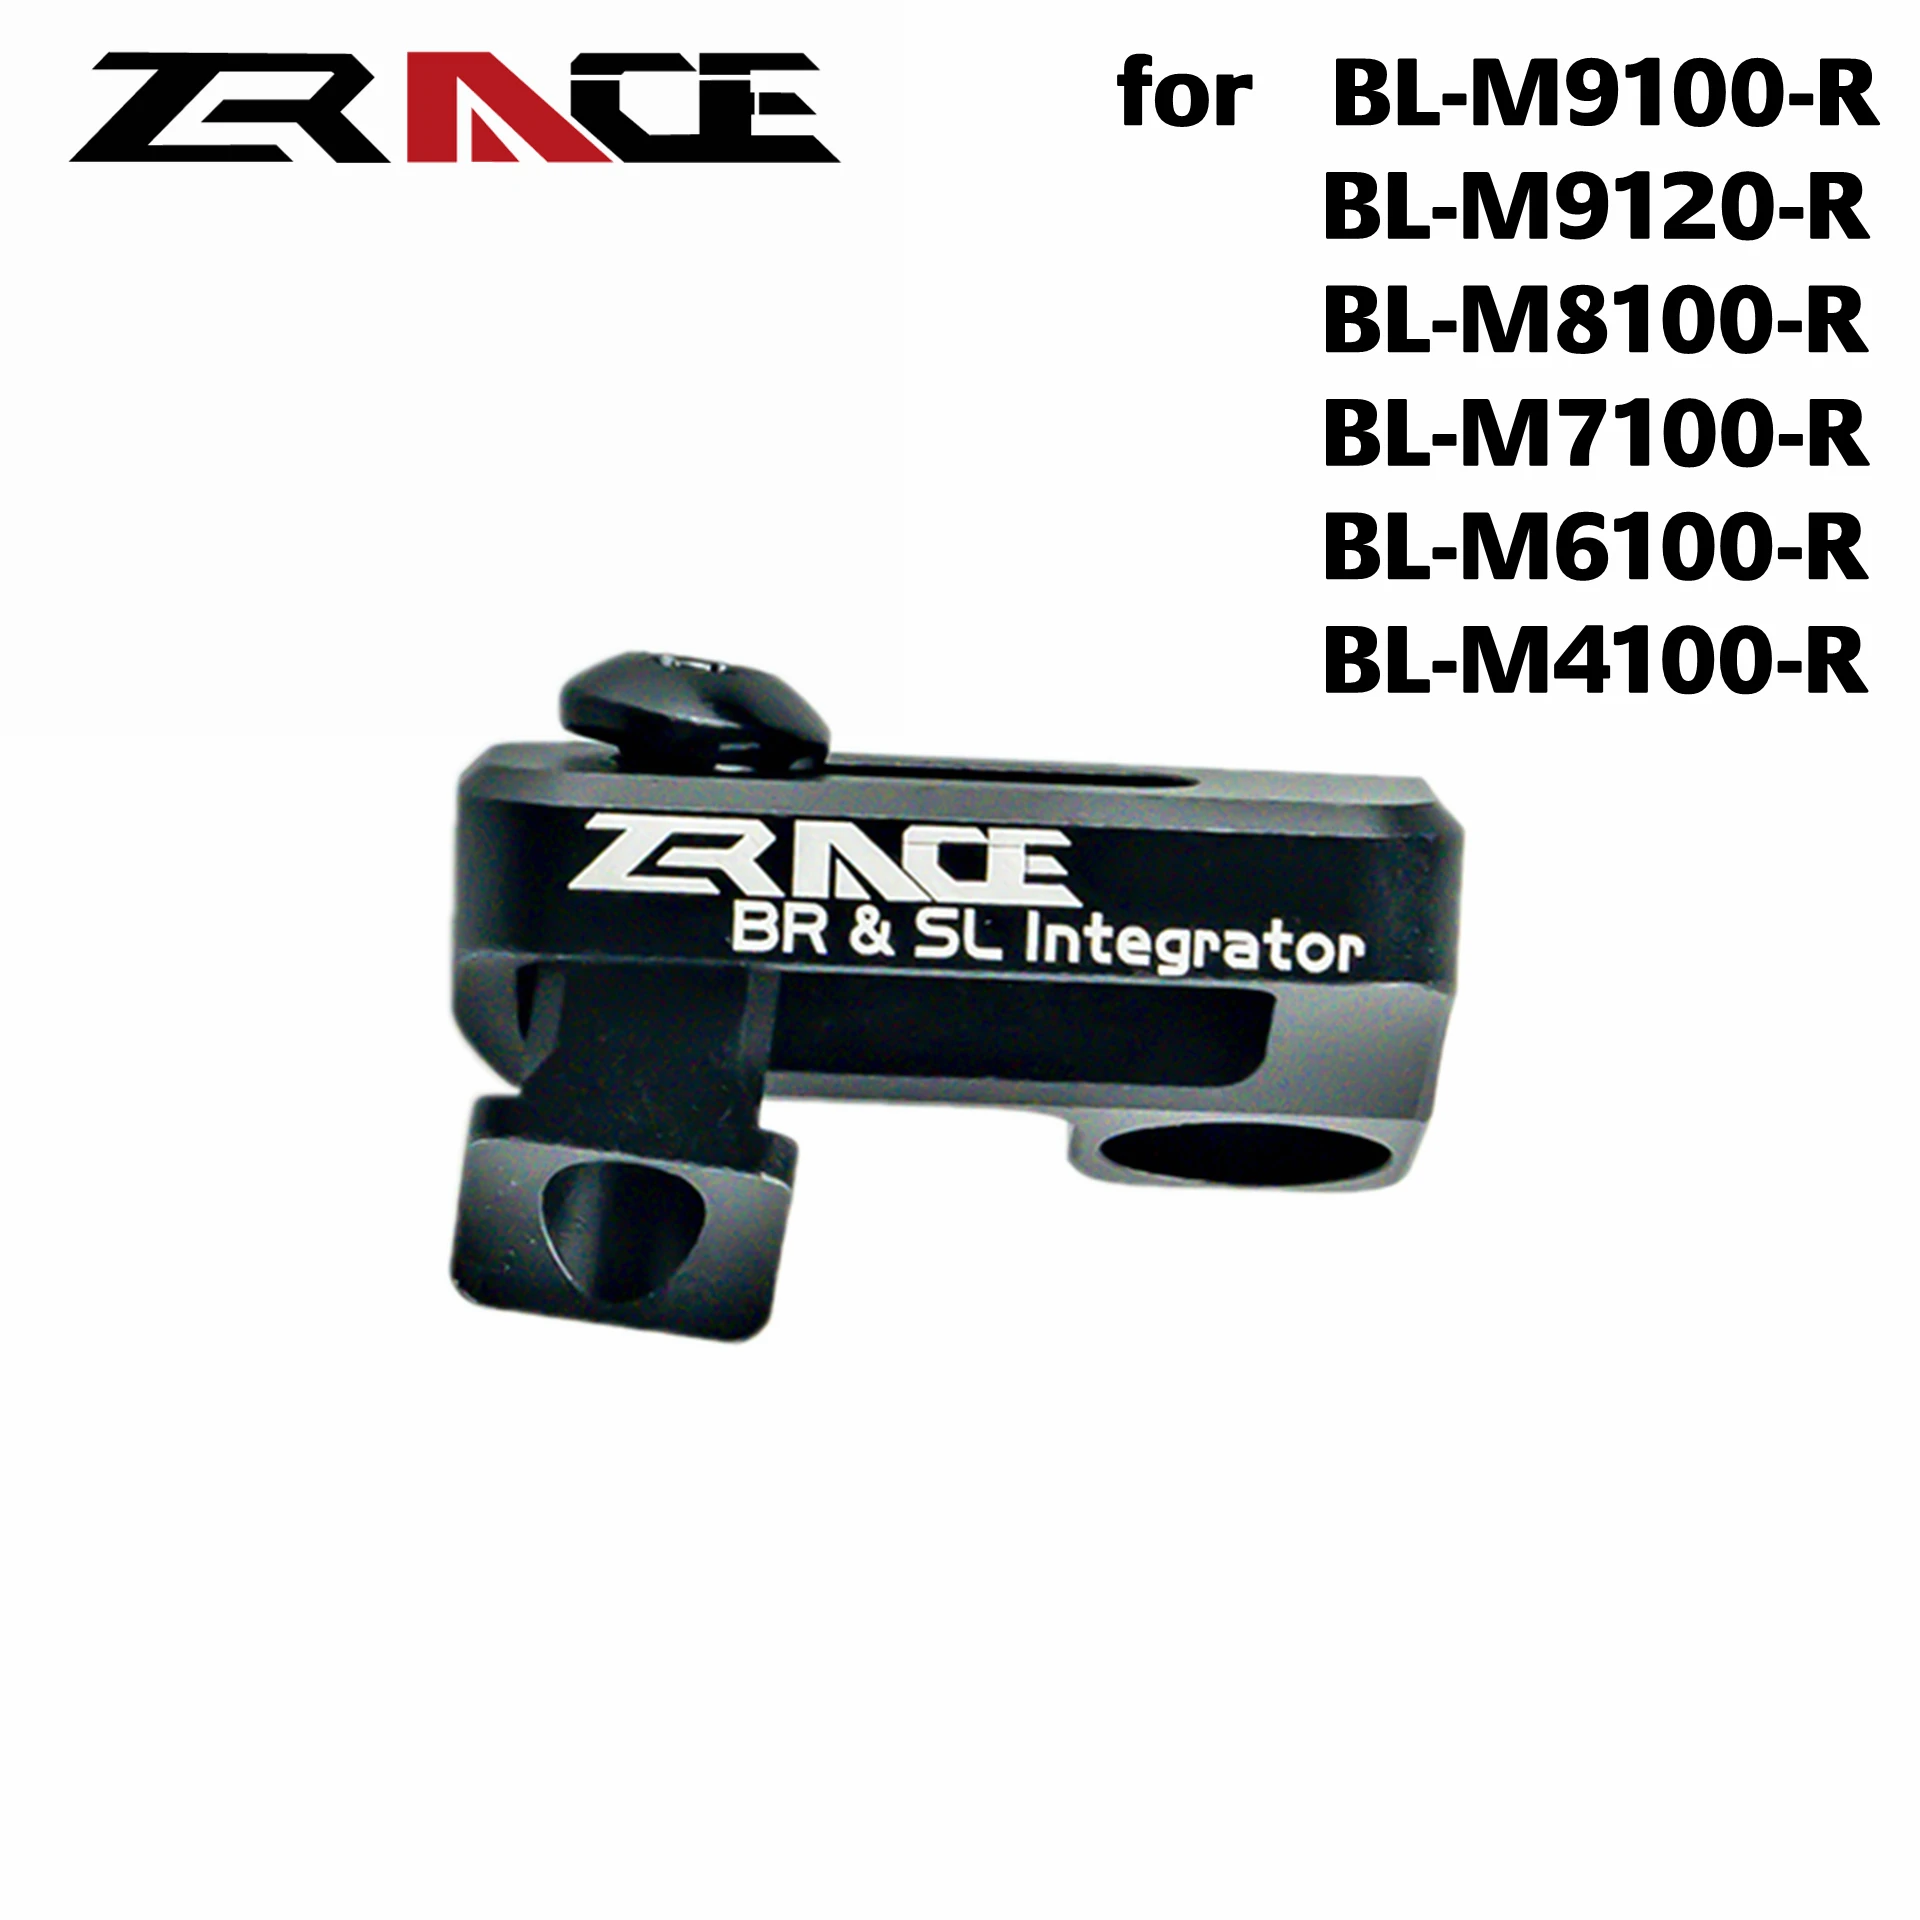 

ZRACE XTR / XT / SLX / DEORE Brake integrated SRAM Shifter Adapter, SRAM Matchmaker shifter mounting to Shimano I-Spec EV brake